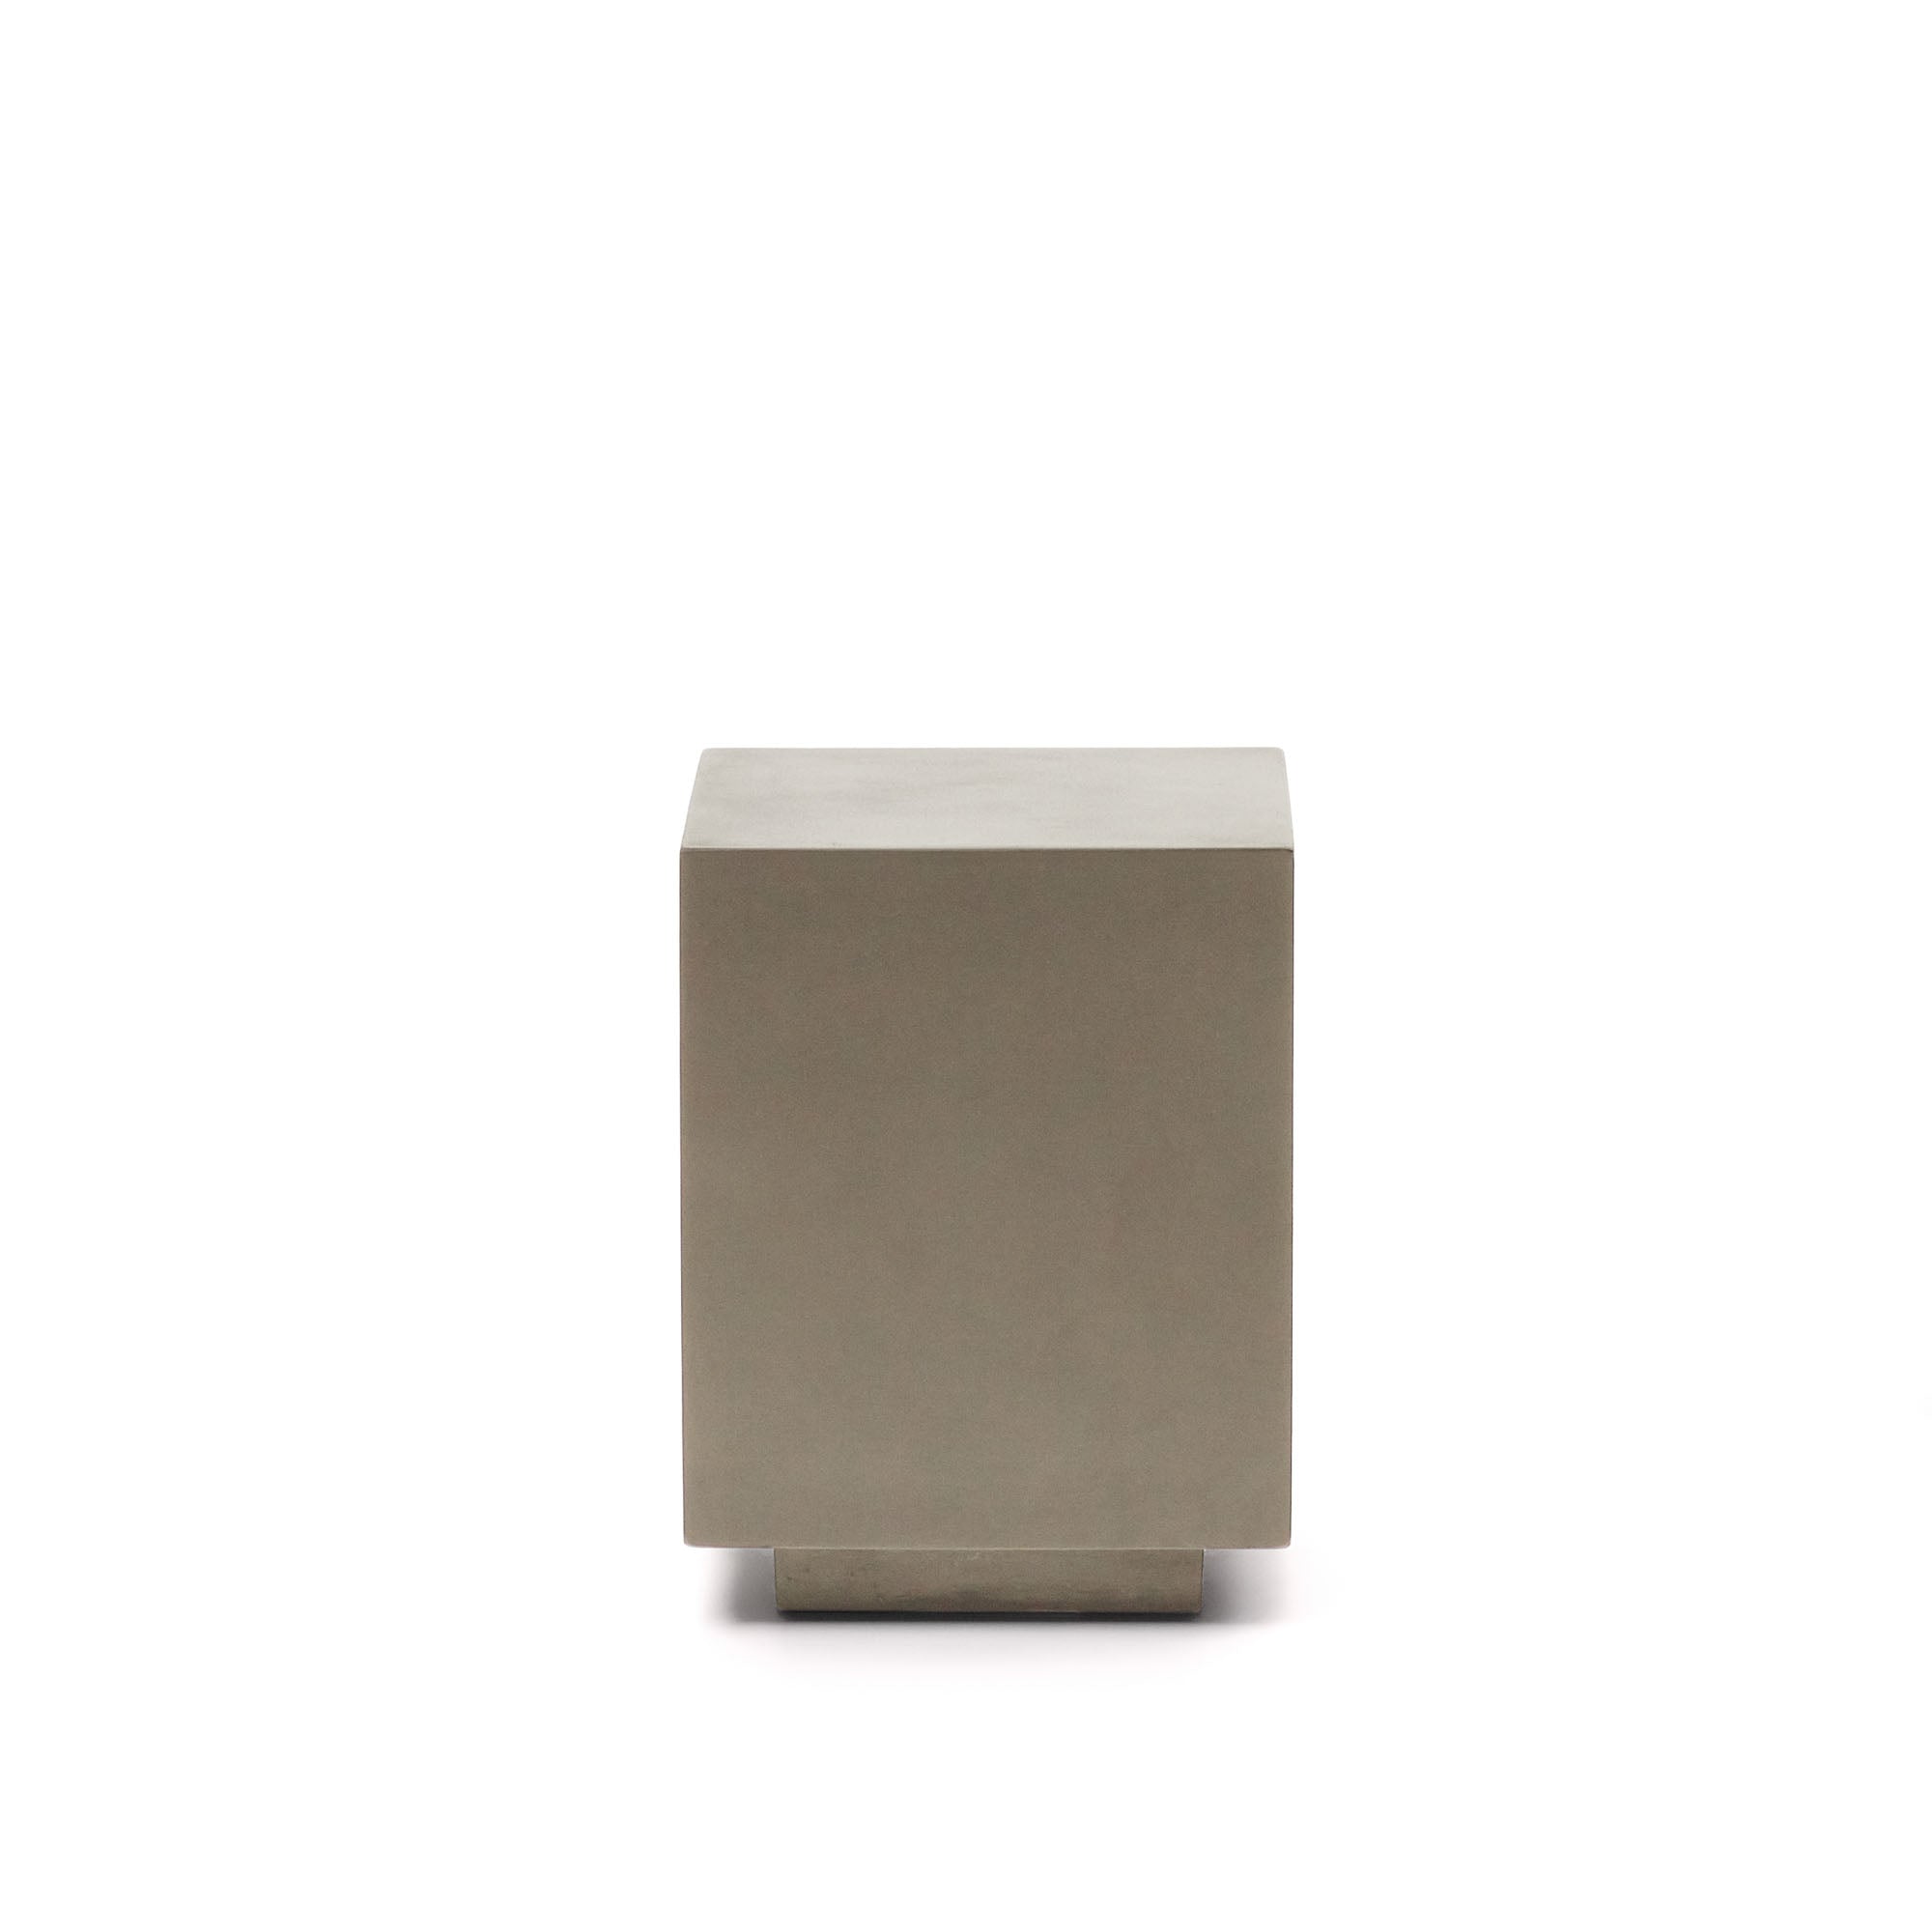 Rustella cement kisasztal, 35 x 35 cm, 35 x 35 cm